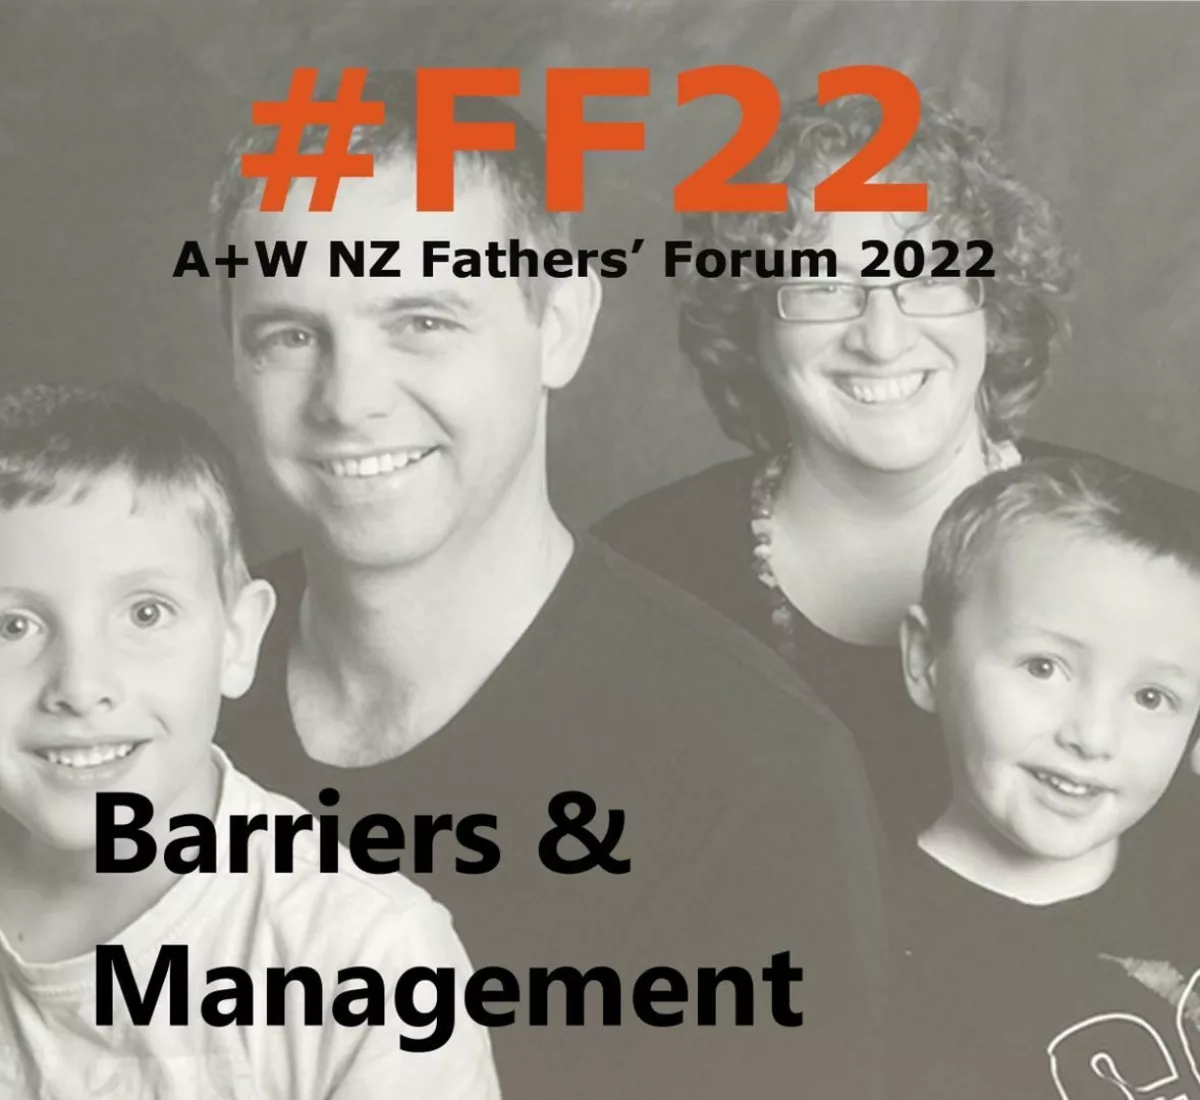 Ff22 fathers forum 6 dec 2022 31